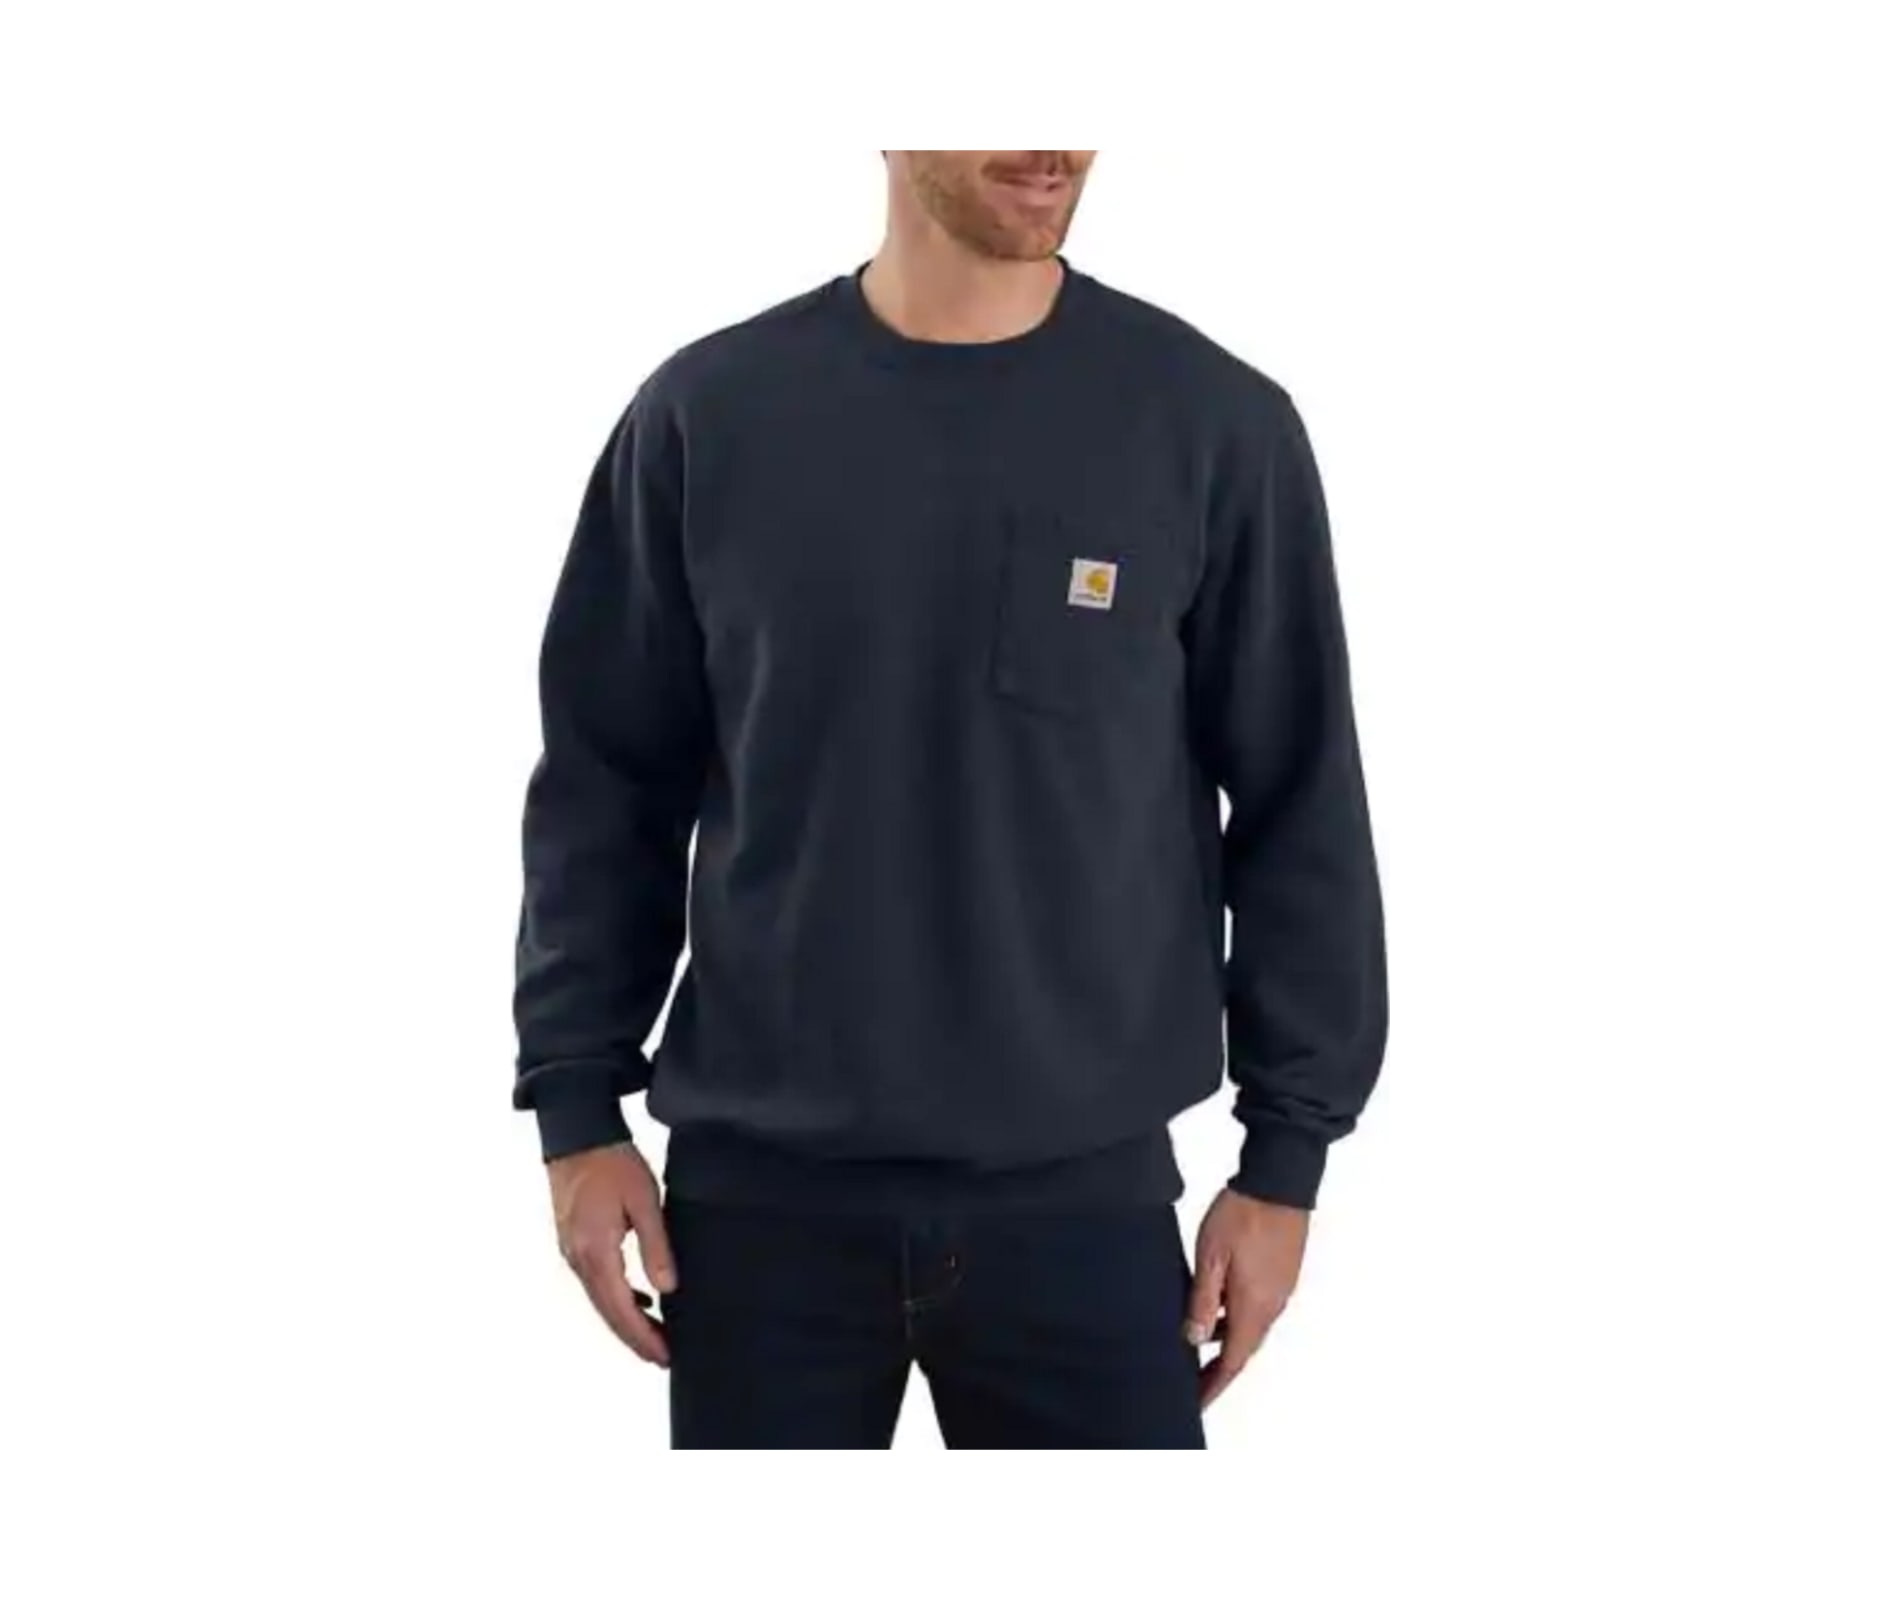 Carhartt Men's Crewneck Pocket Sweatshirt - New Navy - XL REG